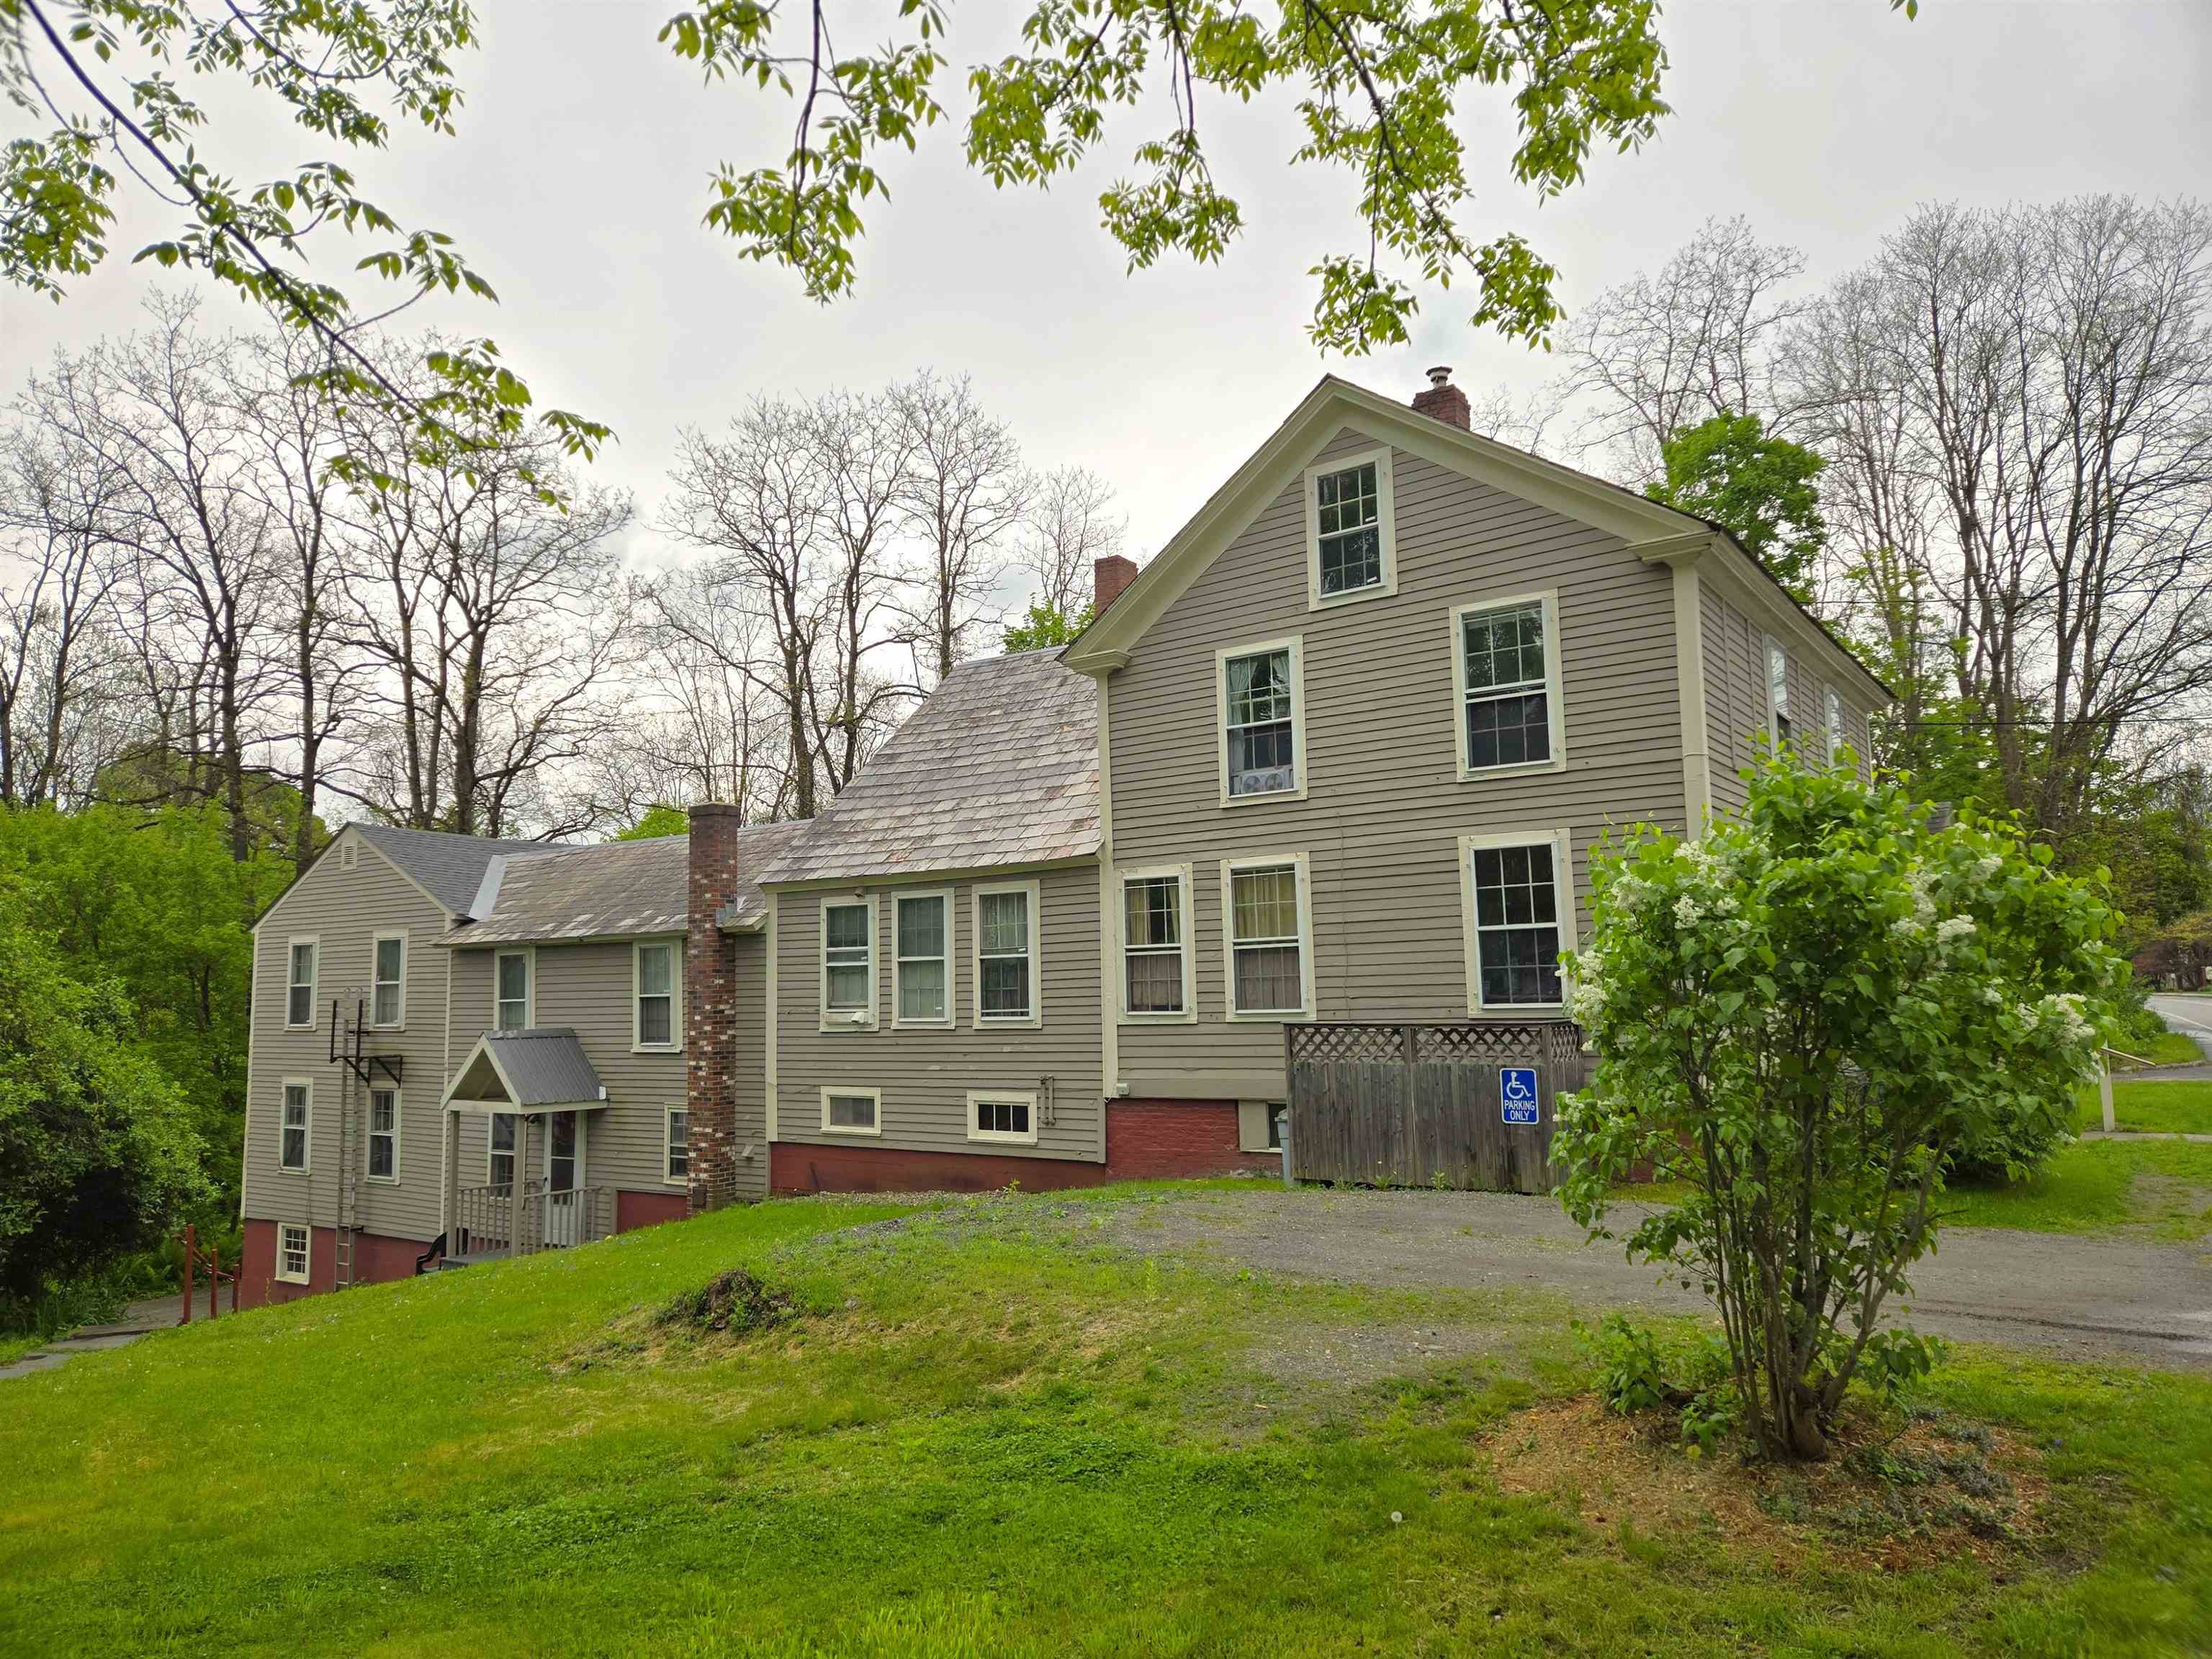 PUTNEY VT Commercial Property for sale $$494,000 | $102 per sq.ft.